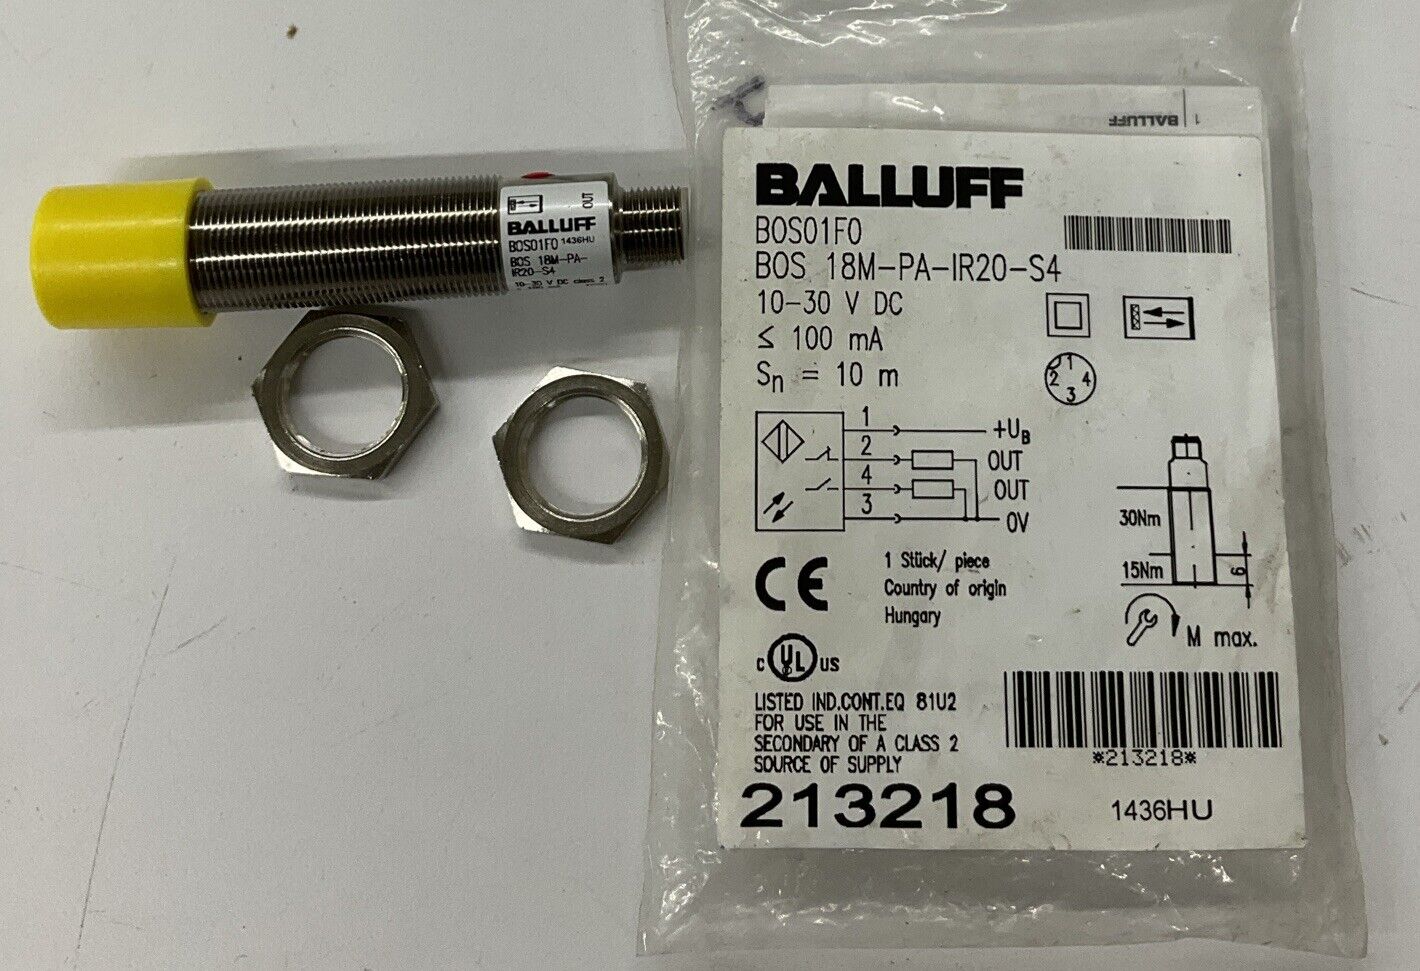 Balluff B0S01F0 / BOS 18M-PA-IR20-S4 Retroreflective Sensor (CL112) - 0